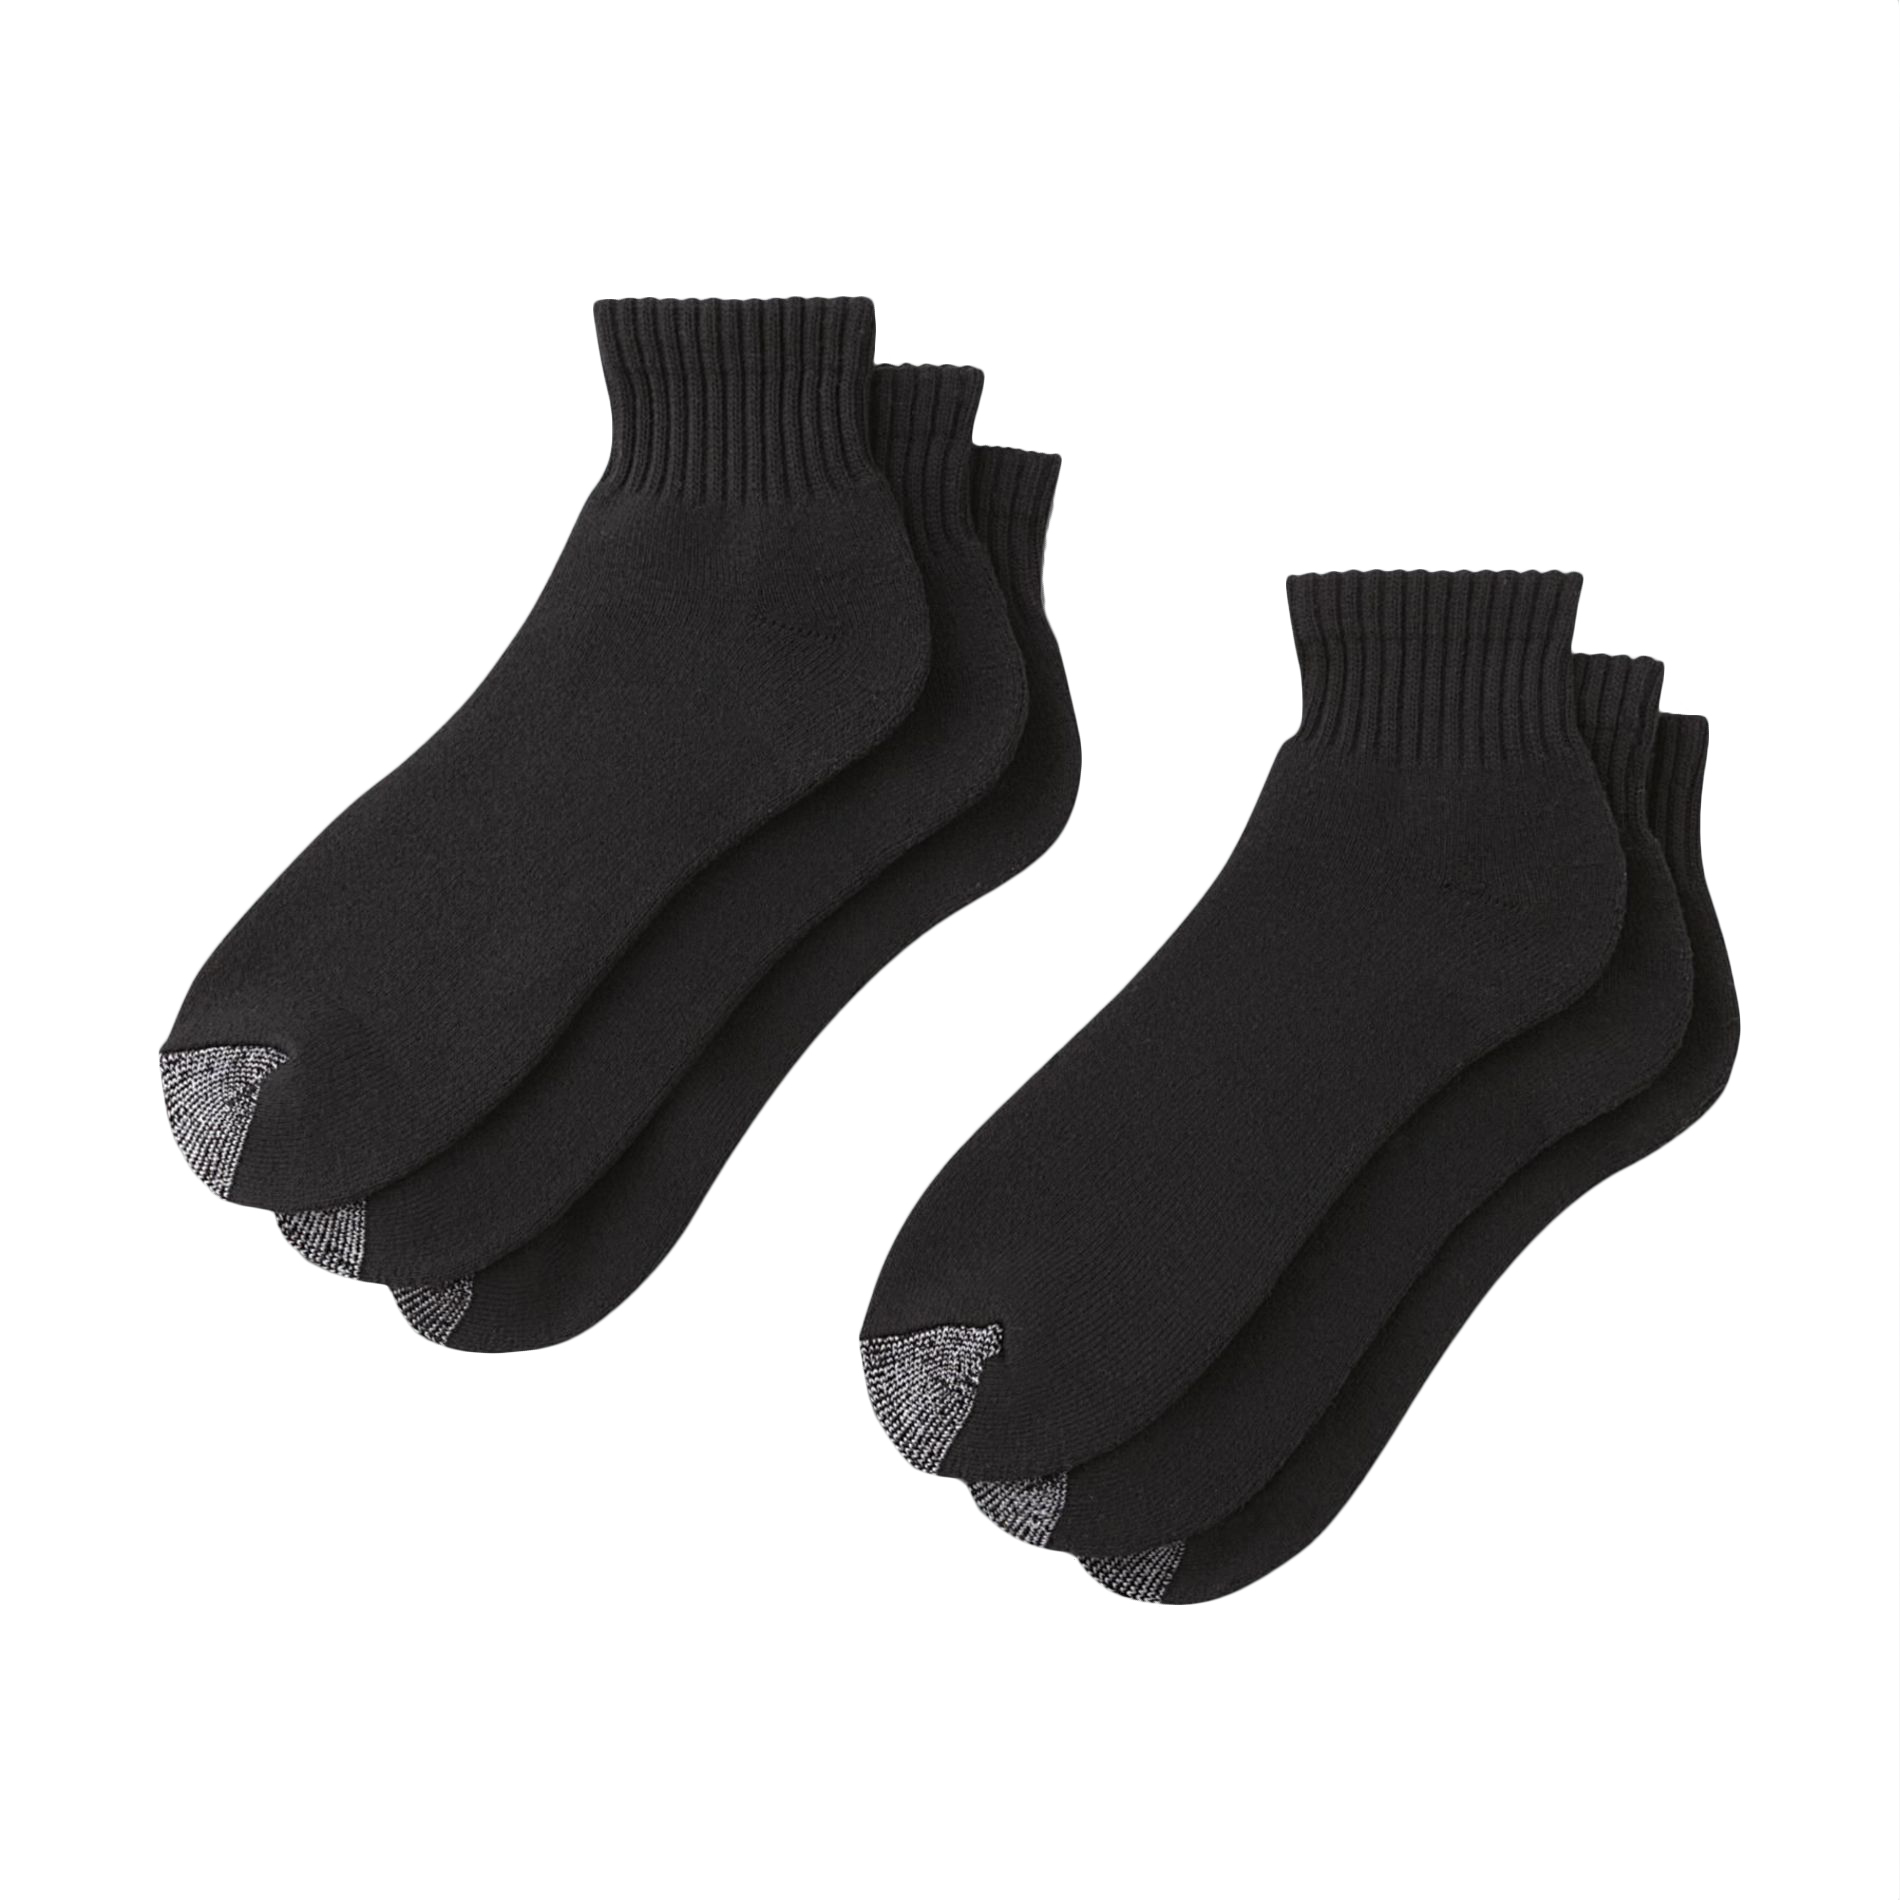 Silvertoe Men's Cushioned Quarter Socks - 6 Pair